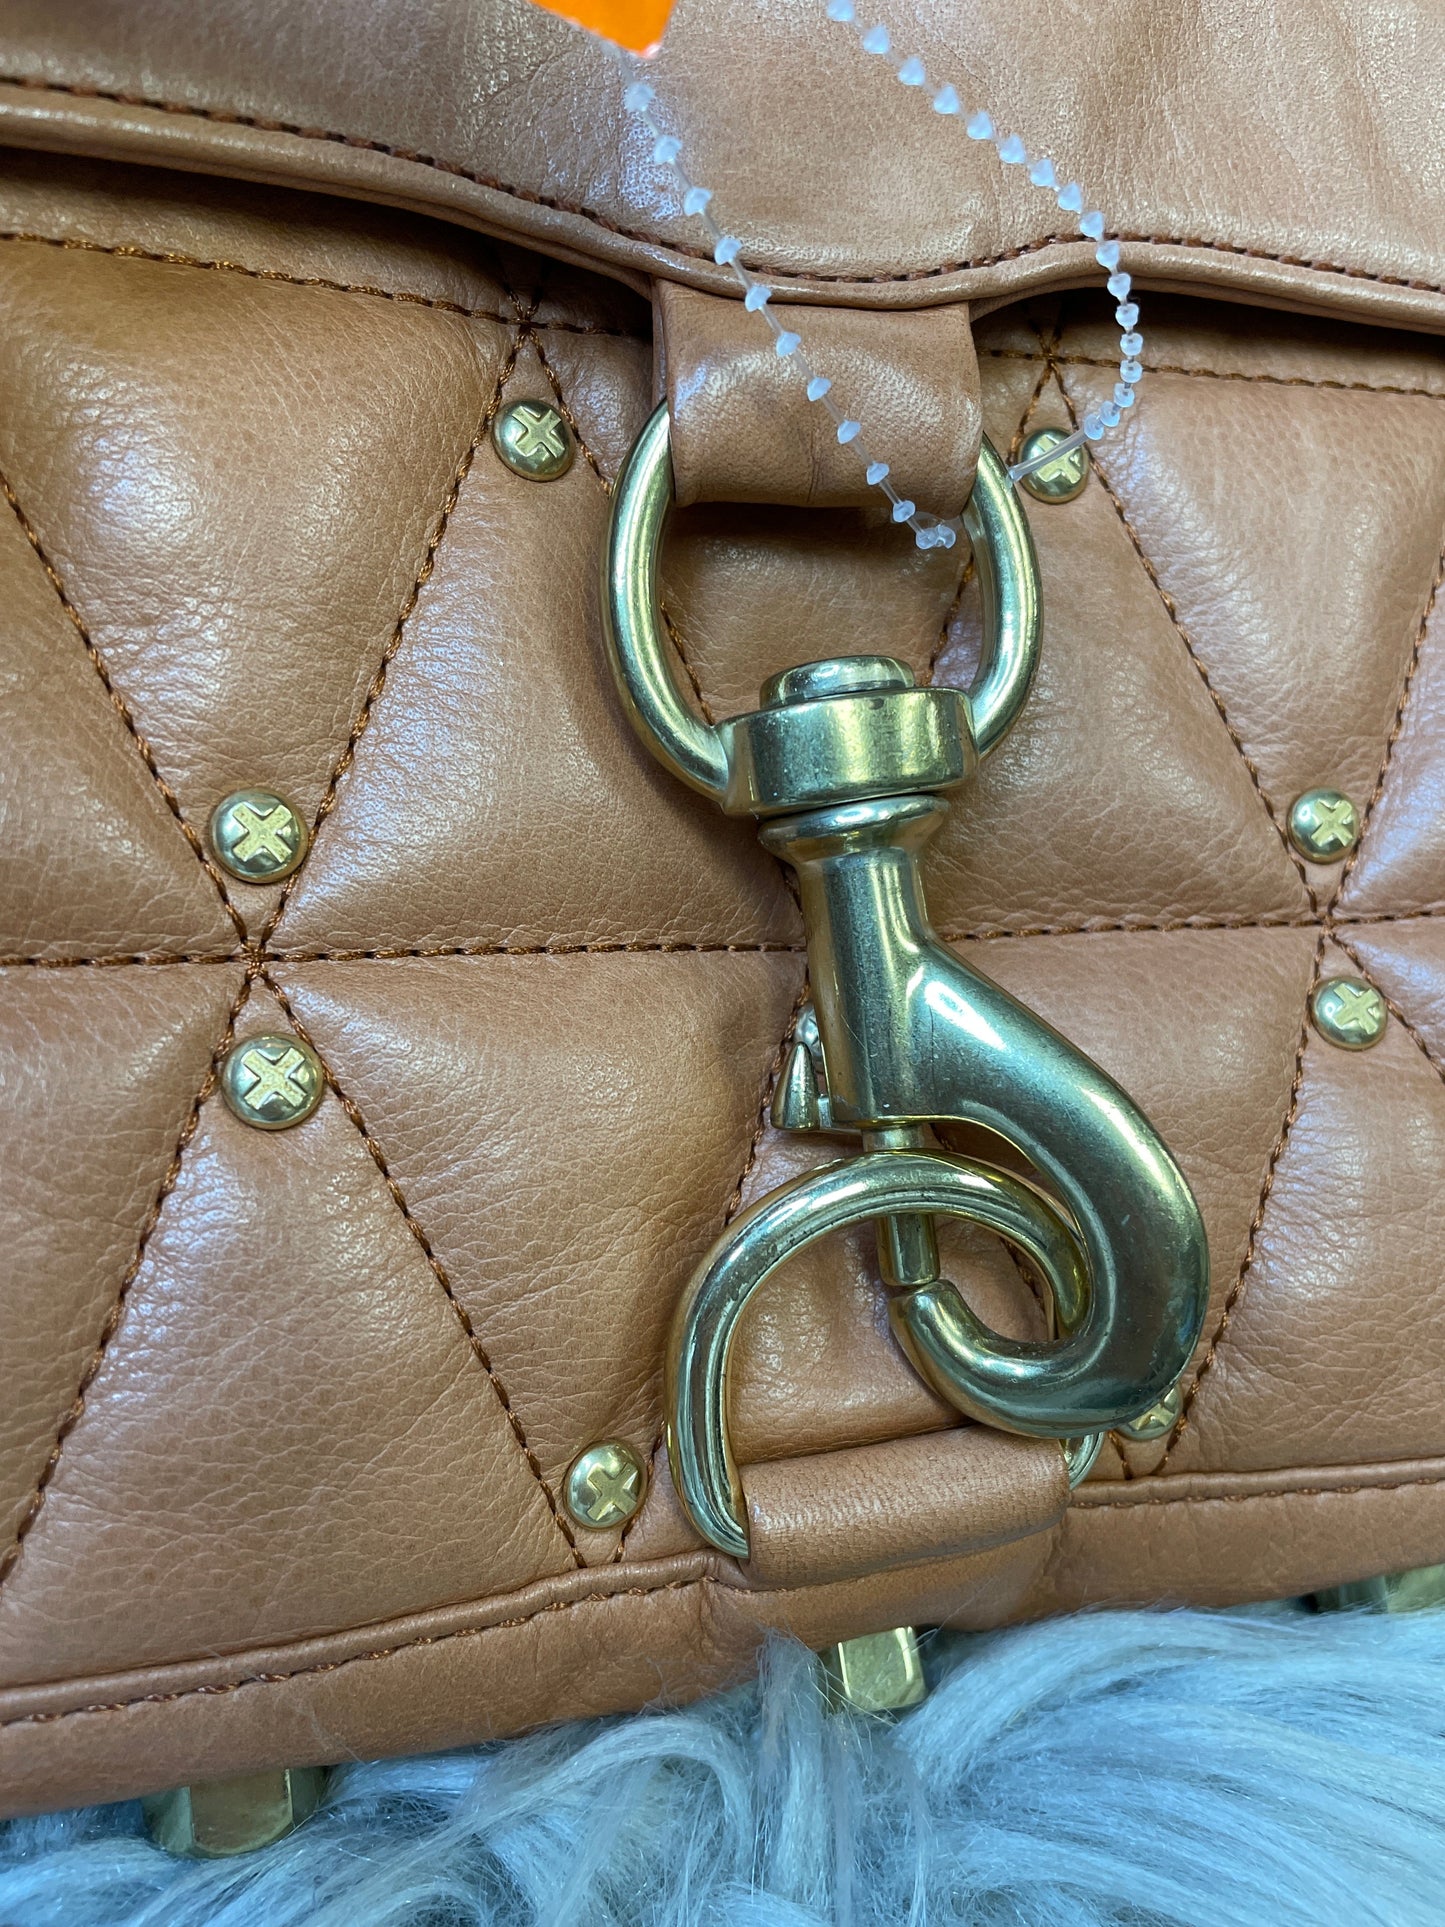 Handbag Leather By Rebecca Minkoff  Size: Medium